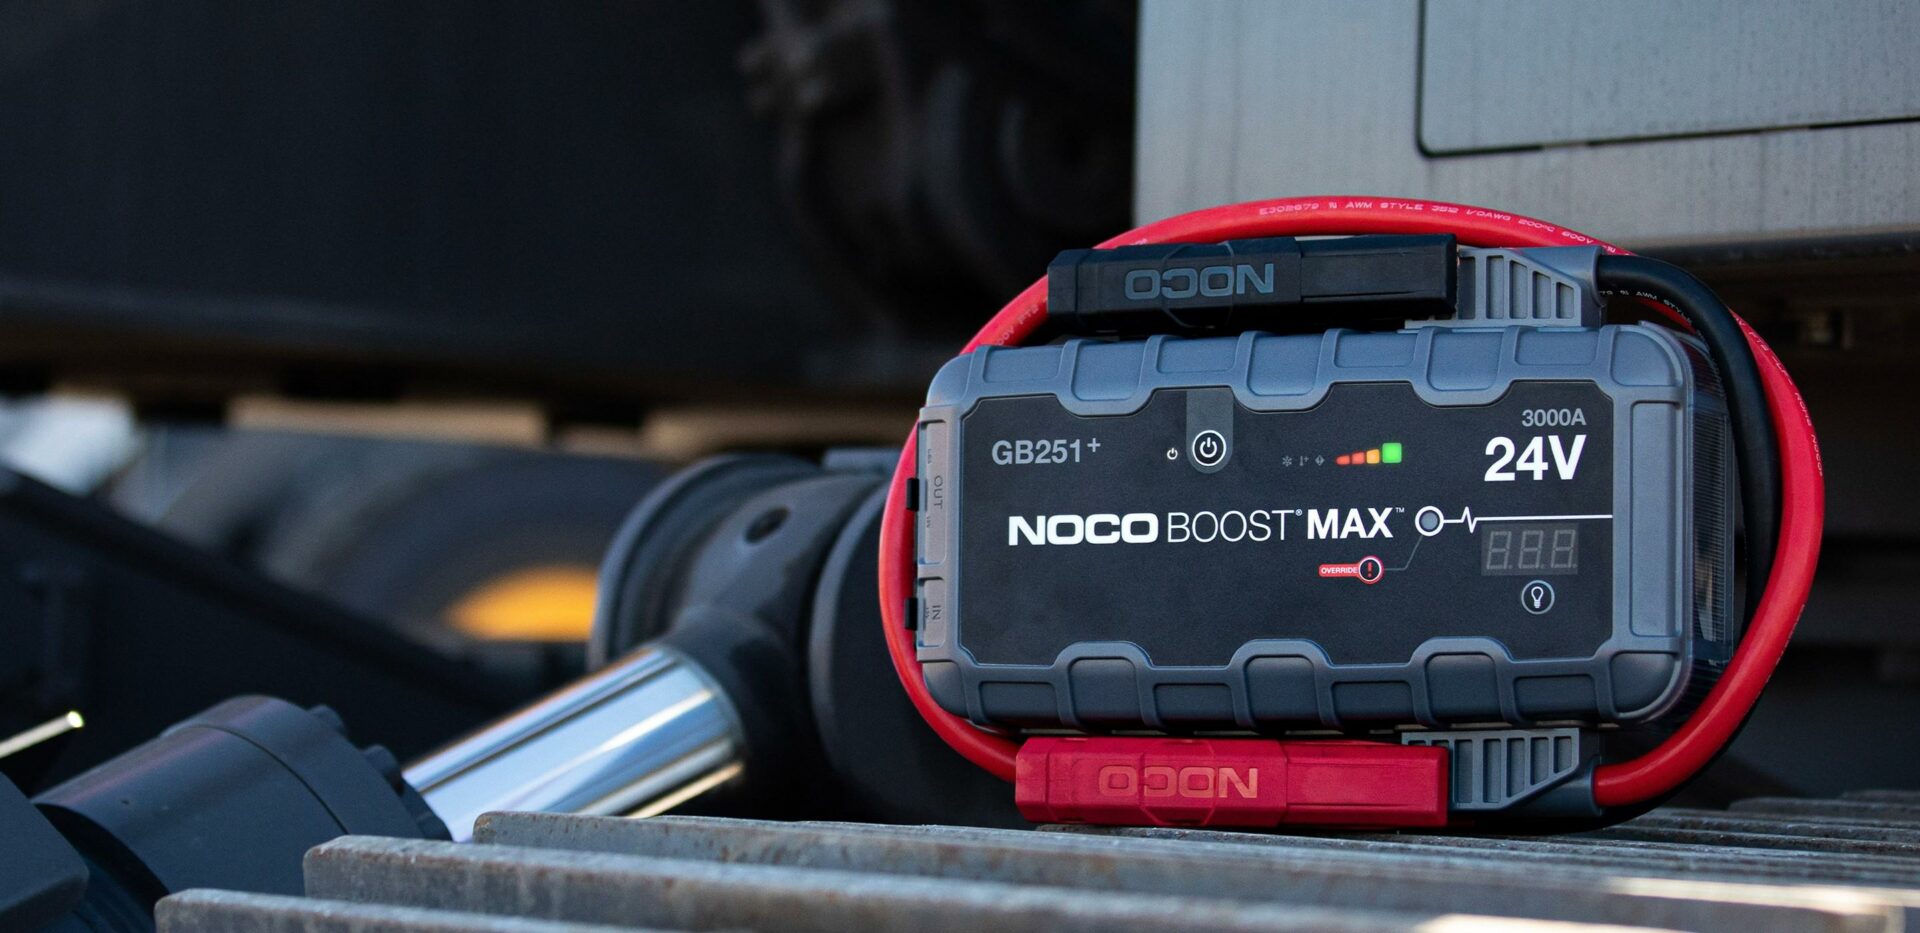 NOCO Boost Max GB251+ 24V 3000 Amp UltraSafe Lithium Jump Starter